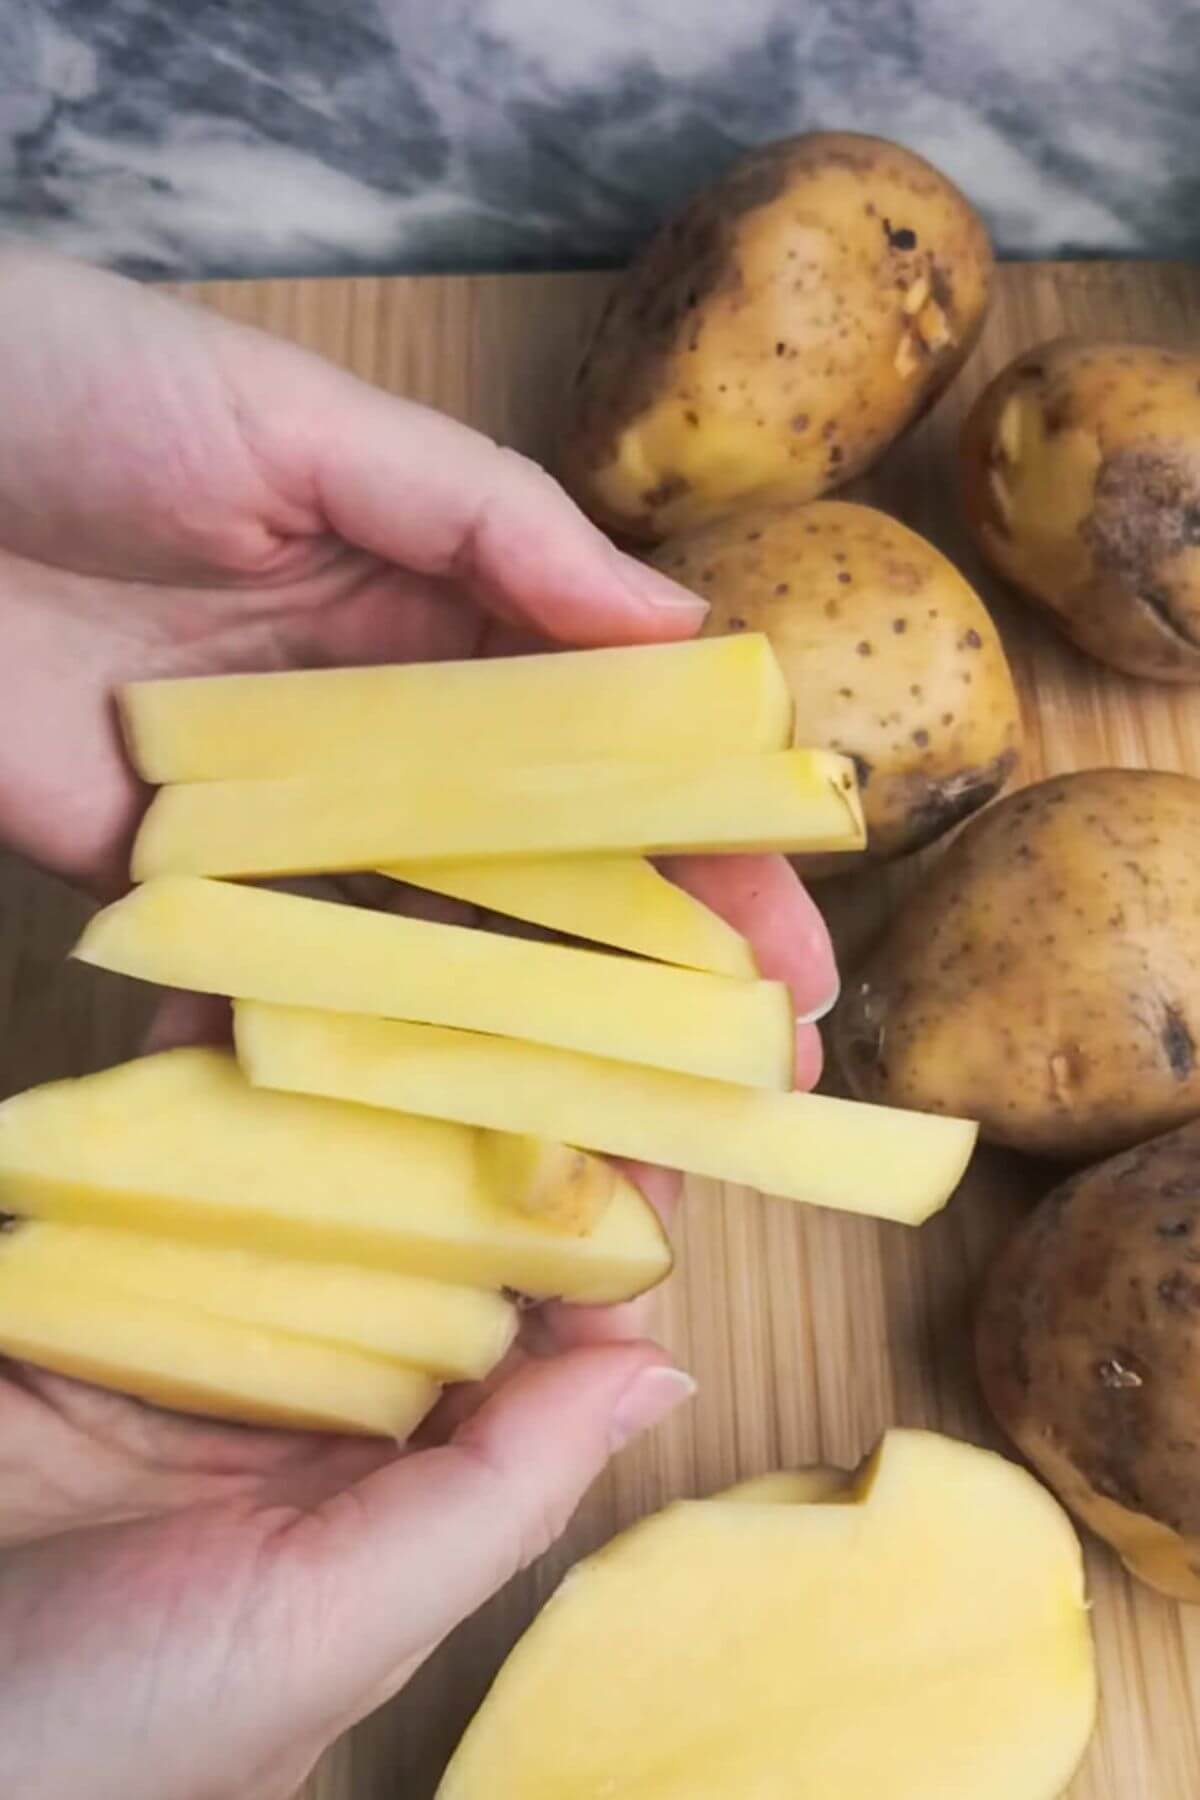 Hands holding up cut potato chips.